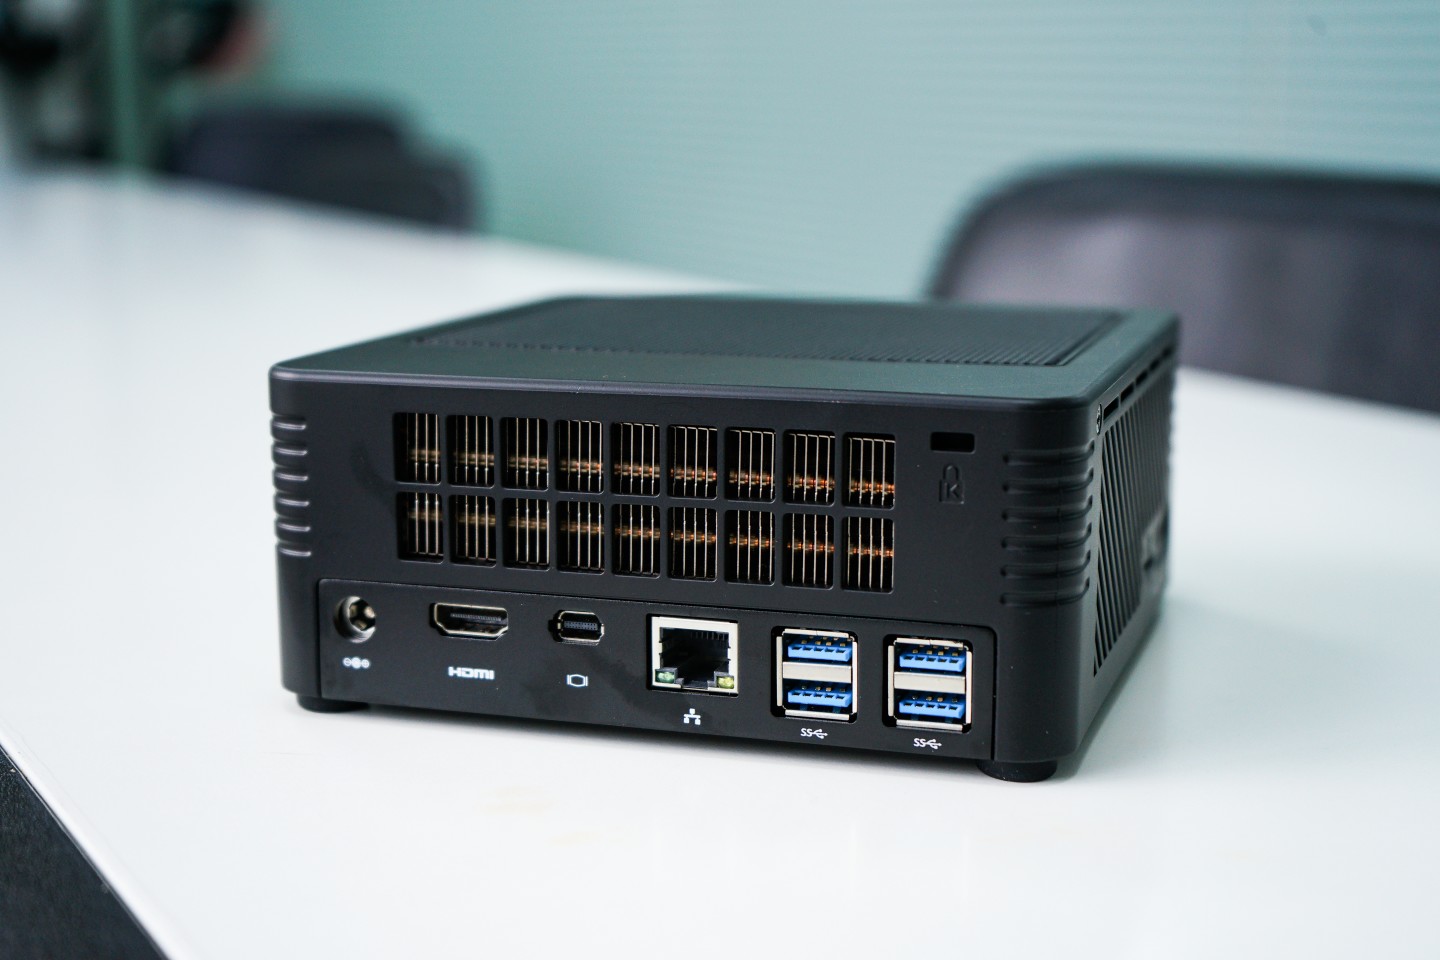 The Minisforum EliteMini H31G has a variety of ports, including HDMI, Mini DisplayPort, four USB 3.0 ports and a 3.5-mm audio jack